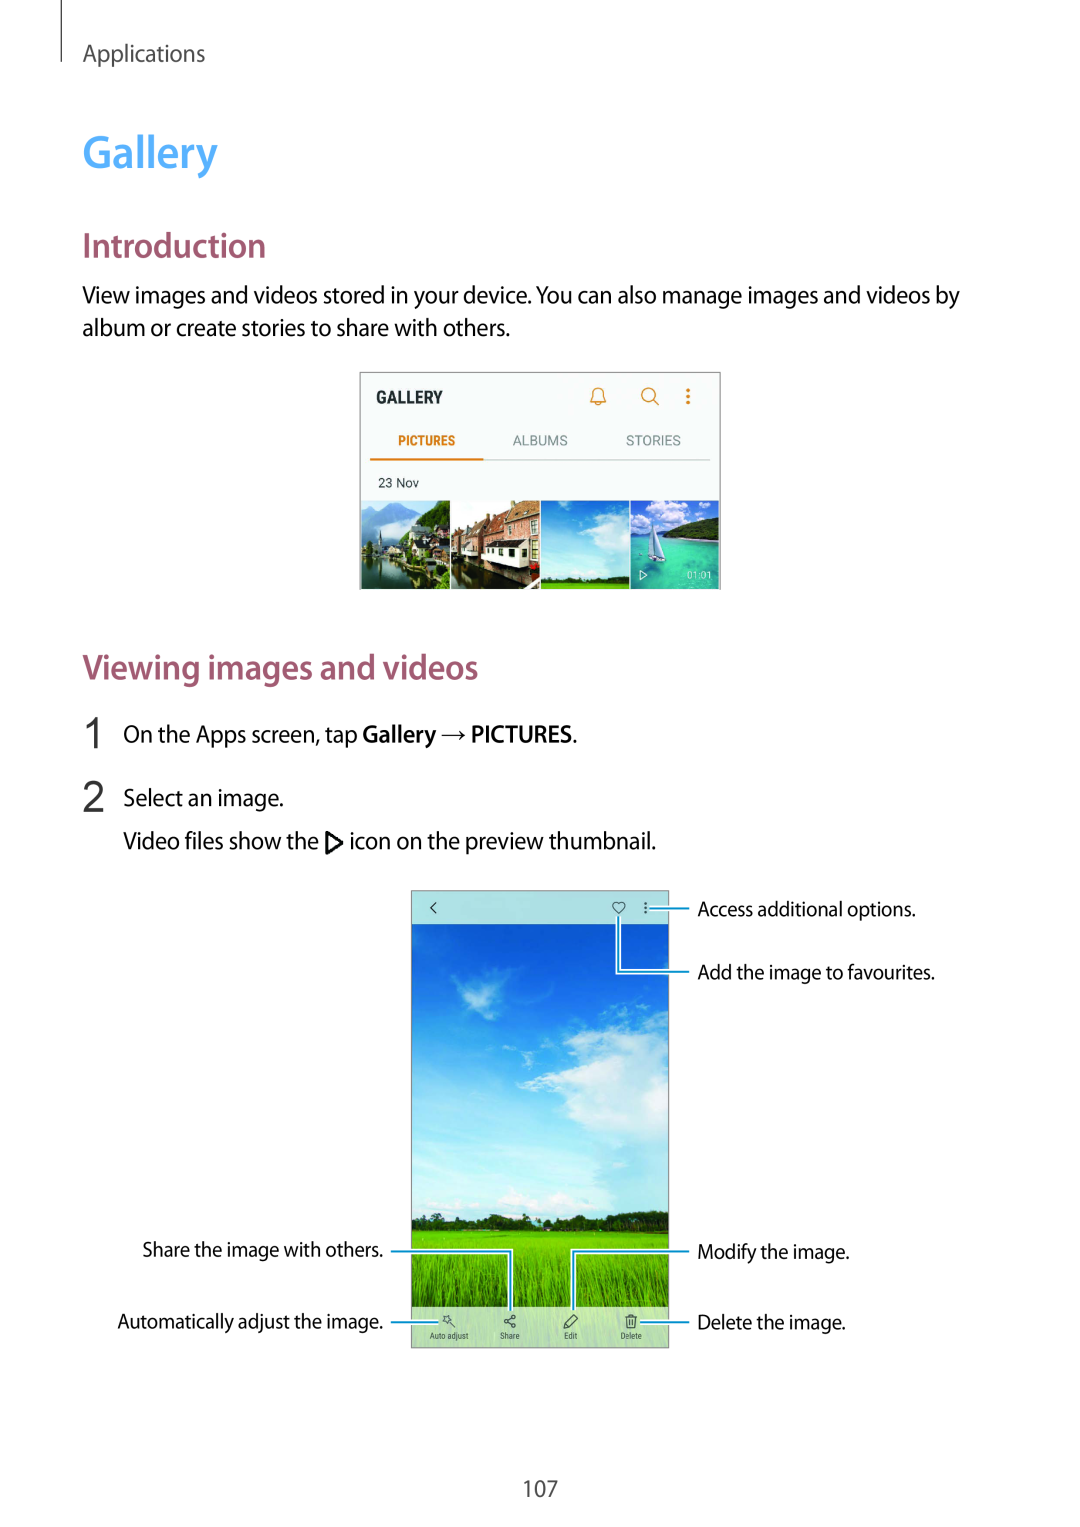 Samsung SM-G928FZKAATO, SM-G925FZKADBT, SM-G925FZWEDBT manual Gallery, Viewing images and videos, Introduction, Applications 